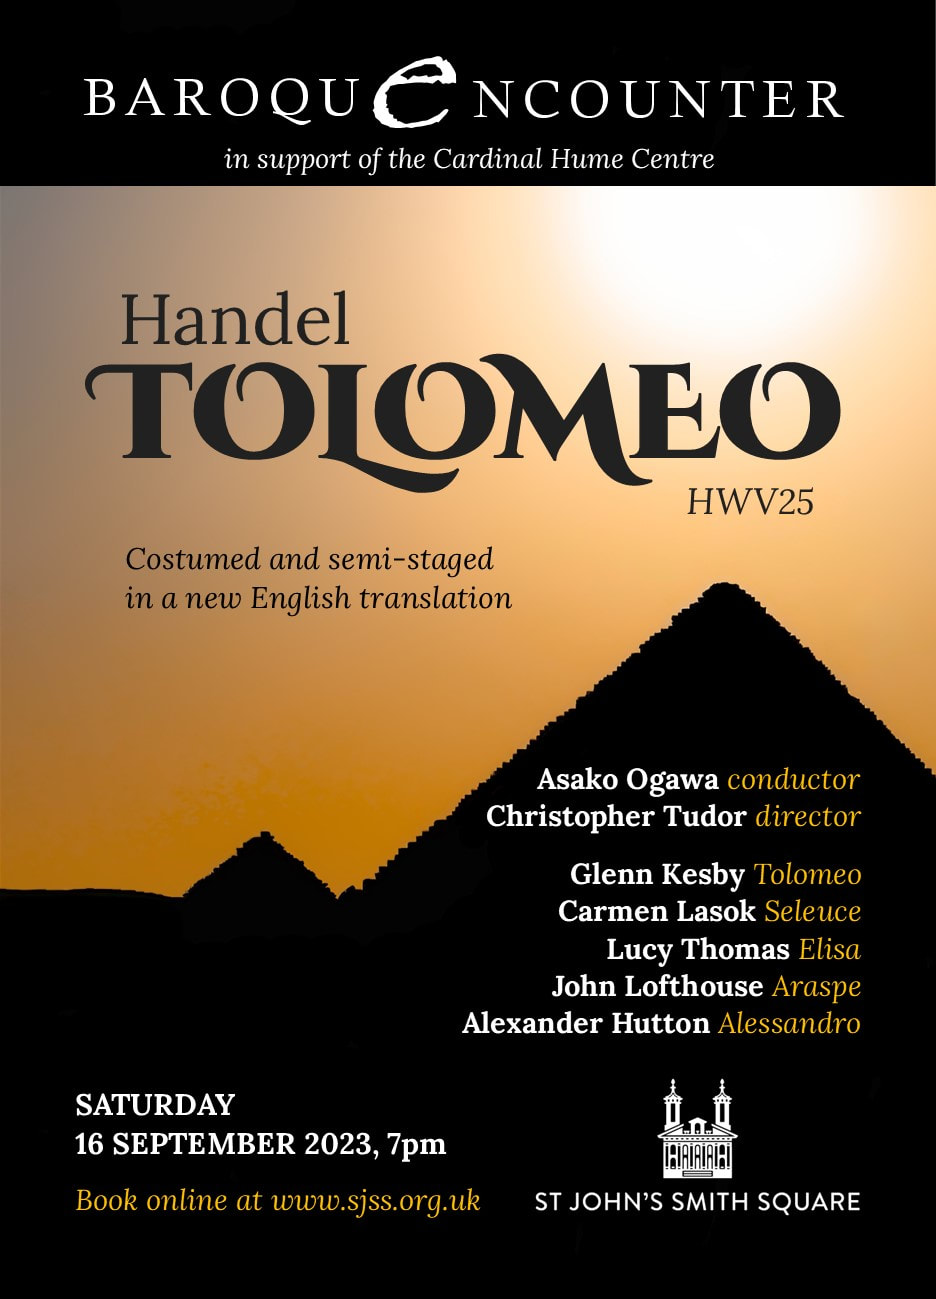 Poster for Handel's Tolomeo